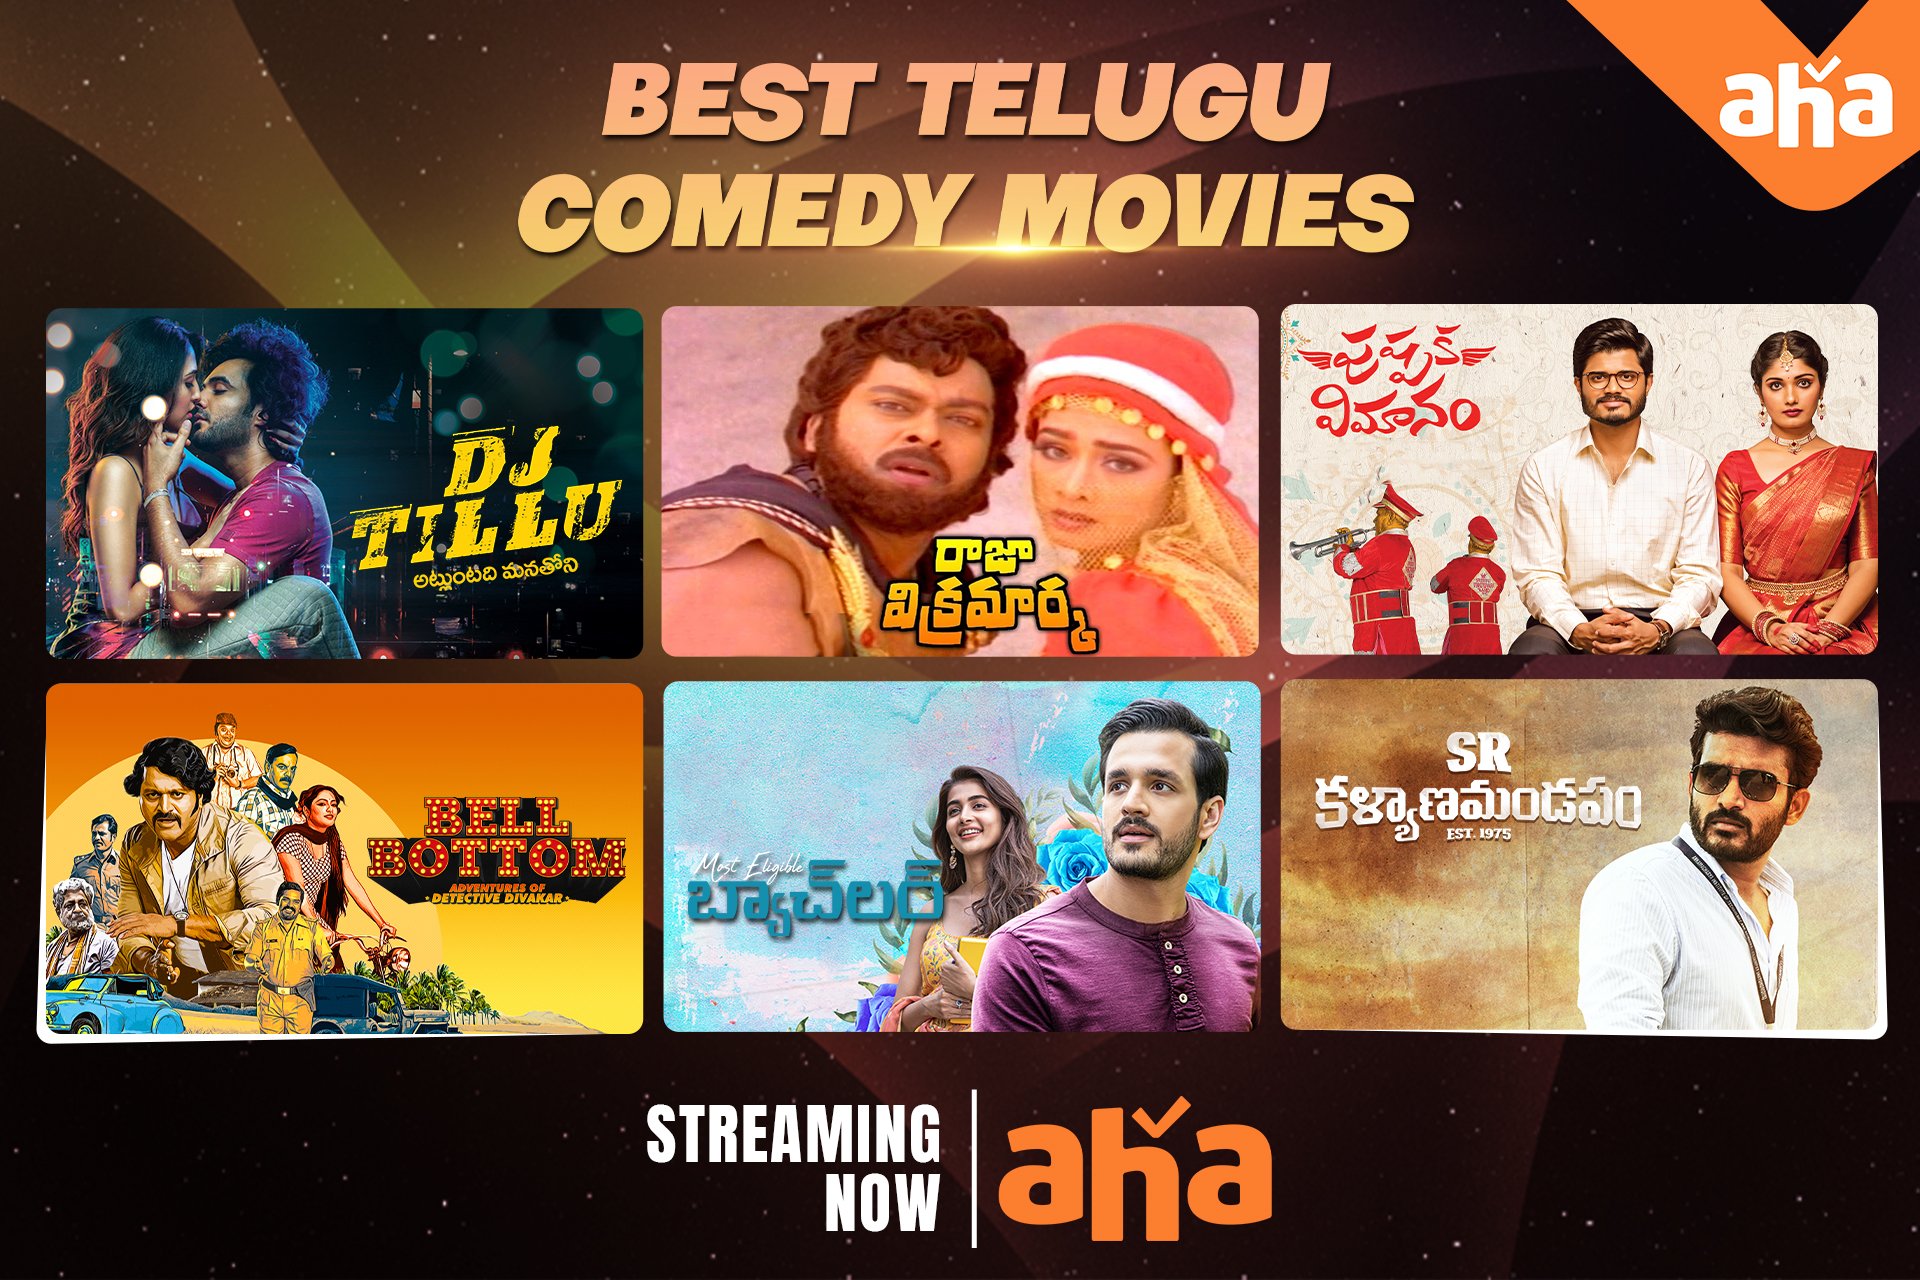 Best Telugu Comedy Movies - aha